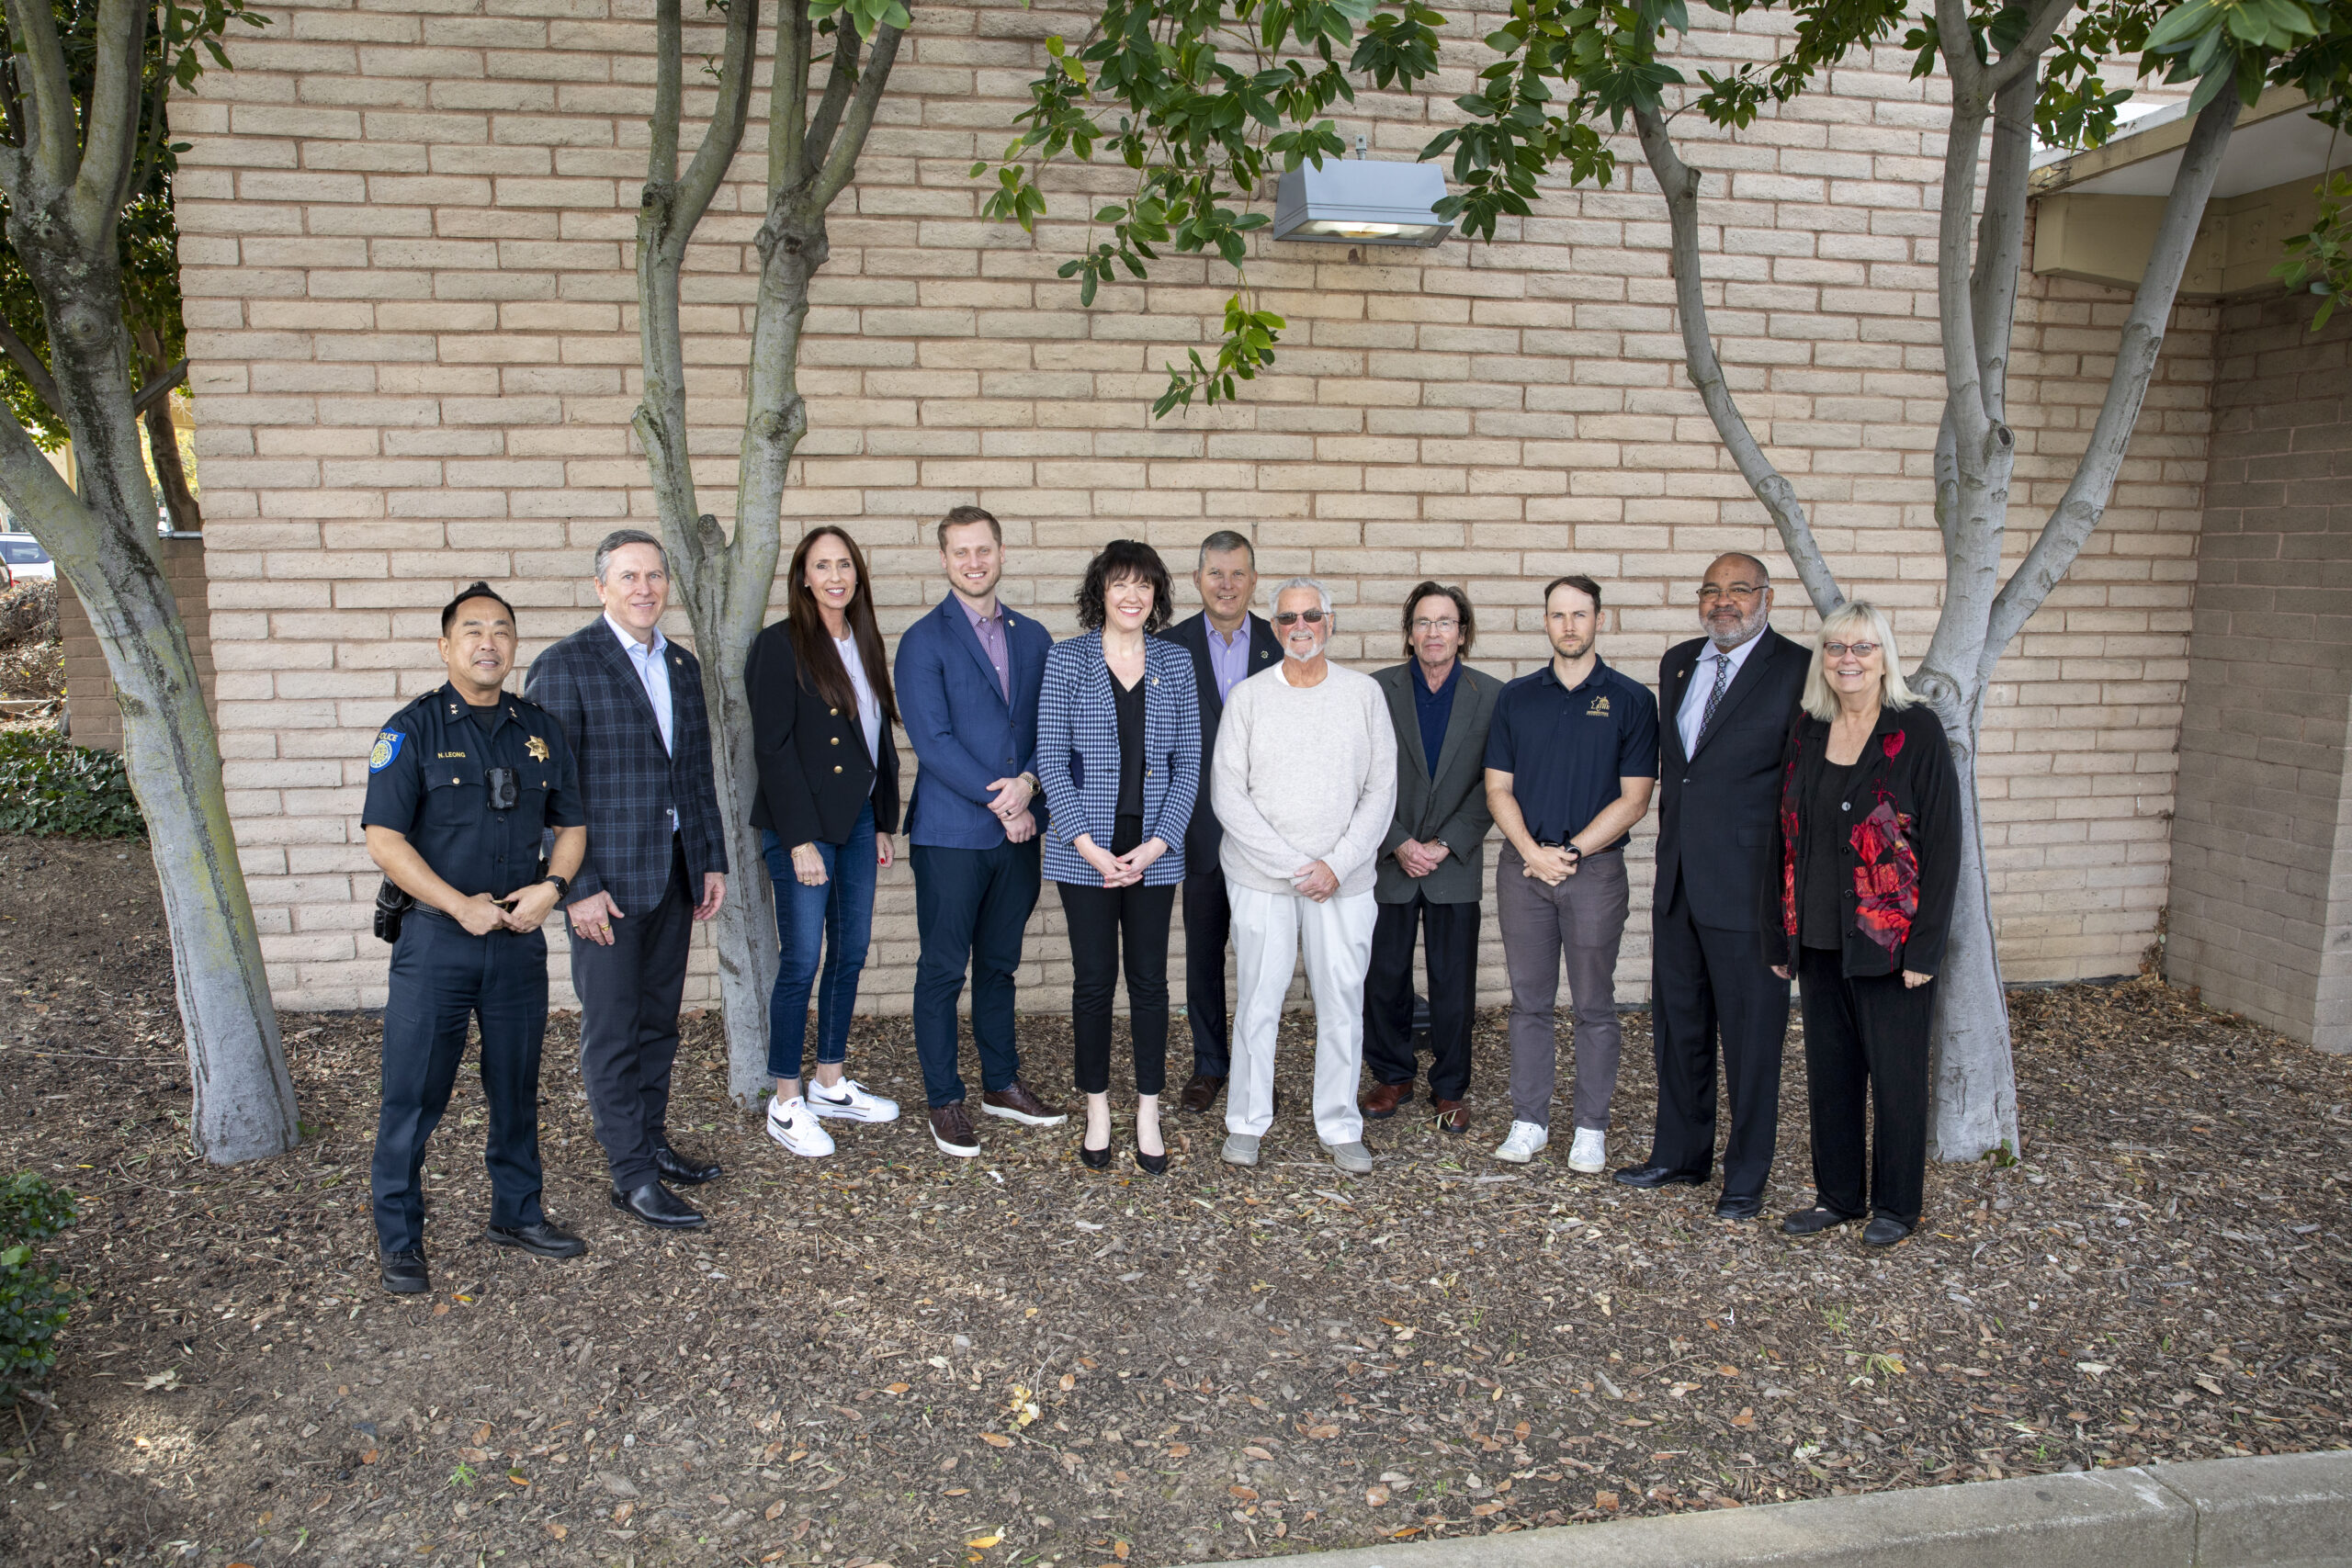 Sacramento Police Foundation Board Members